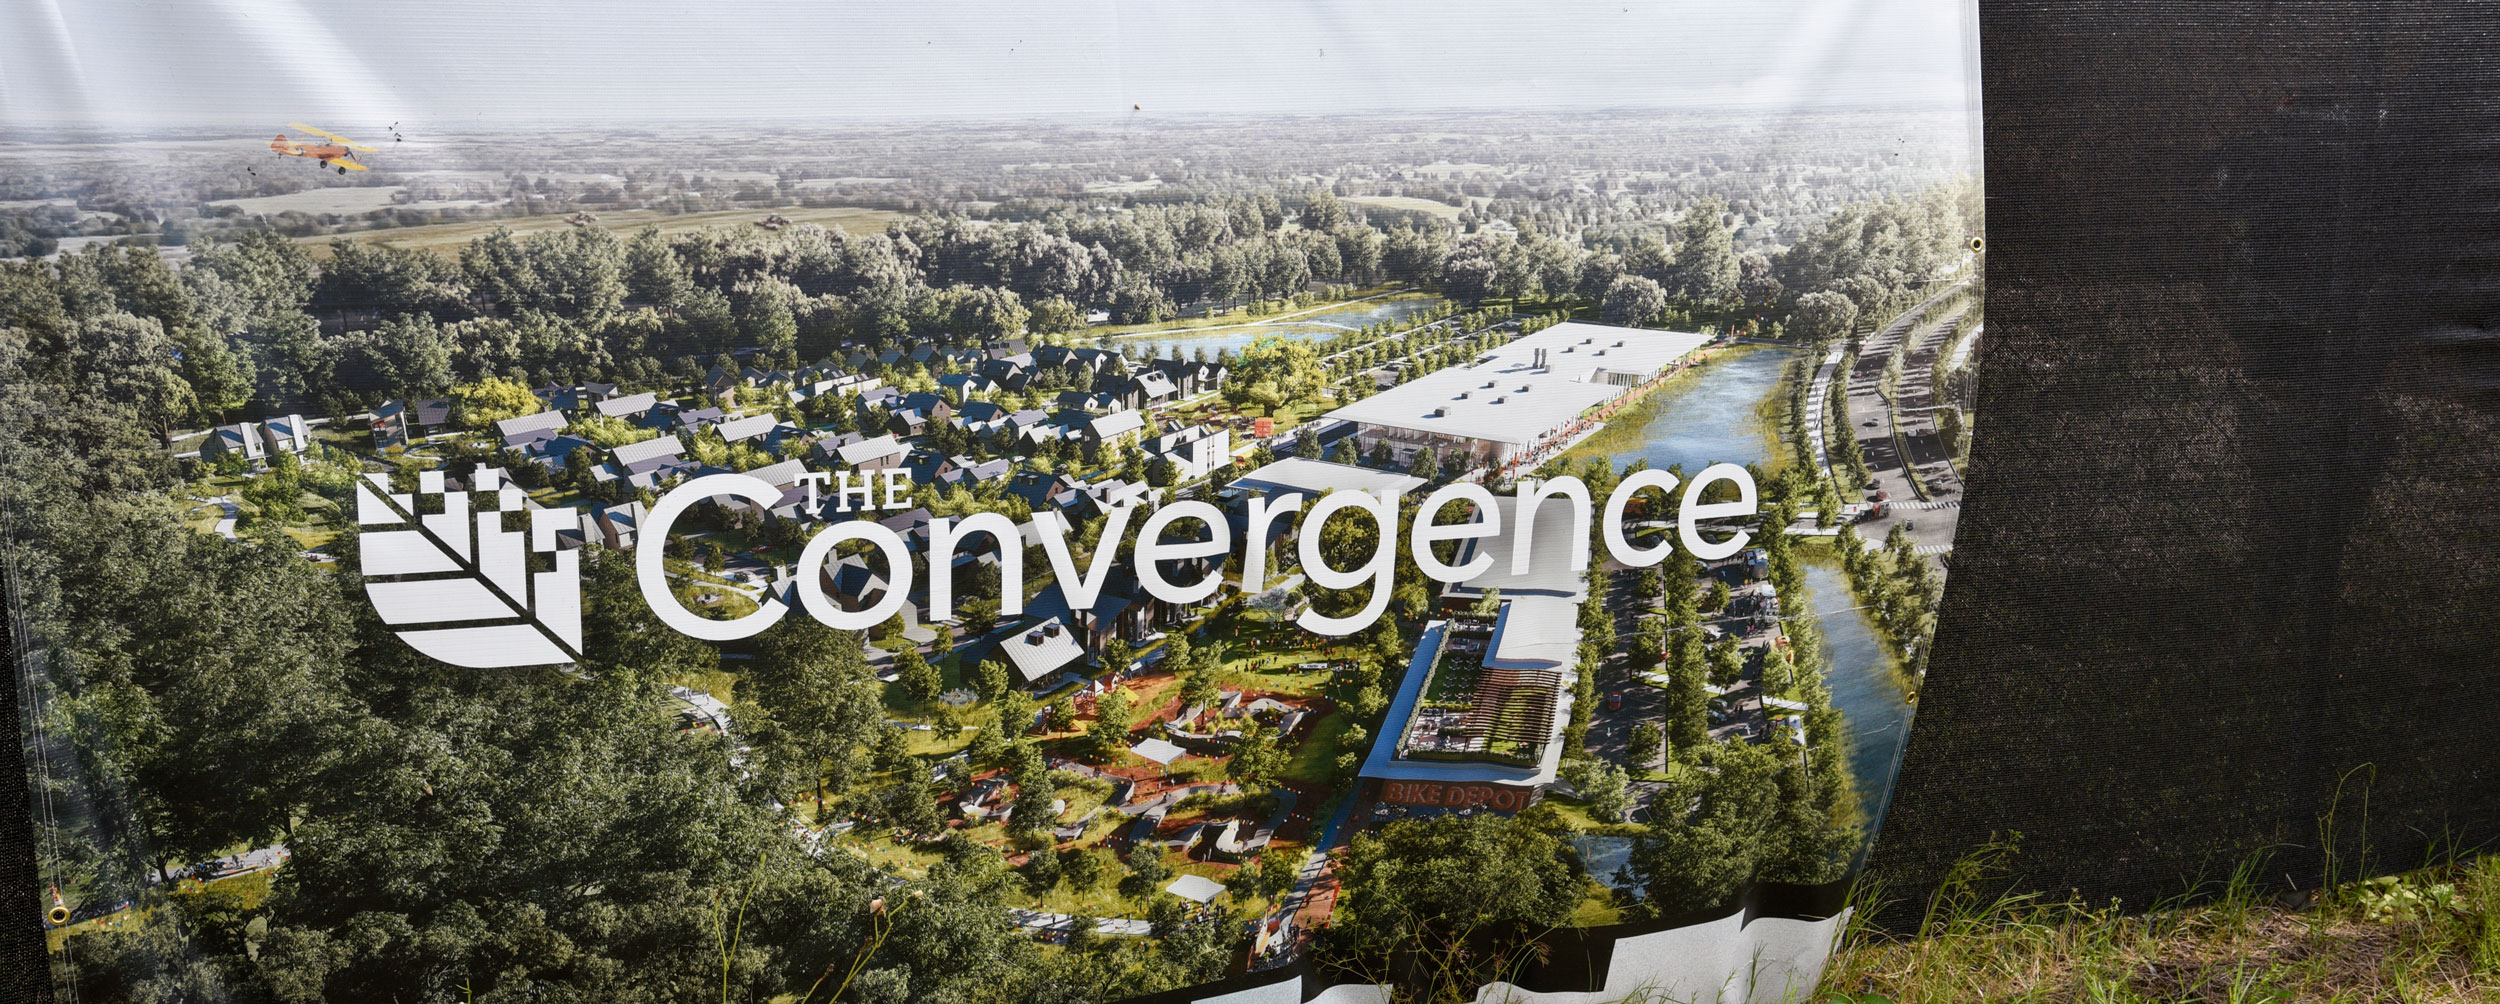 The Convergence Concept Companies Alachua, FL